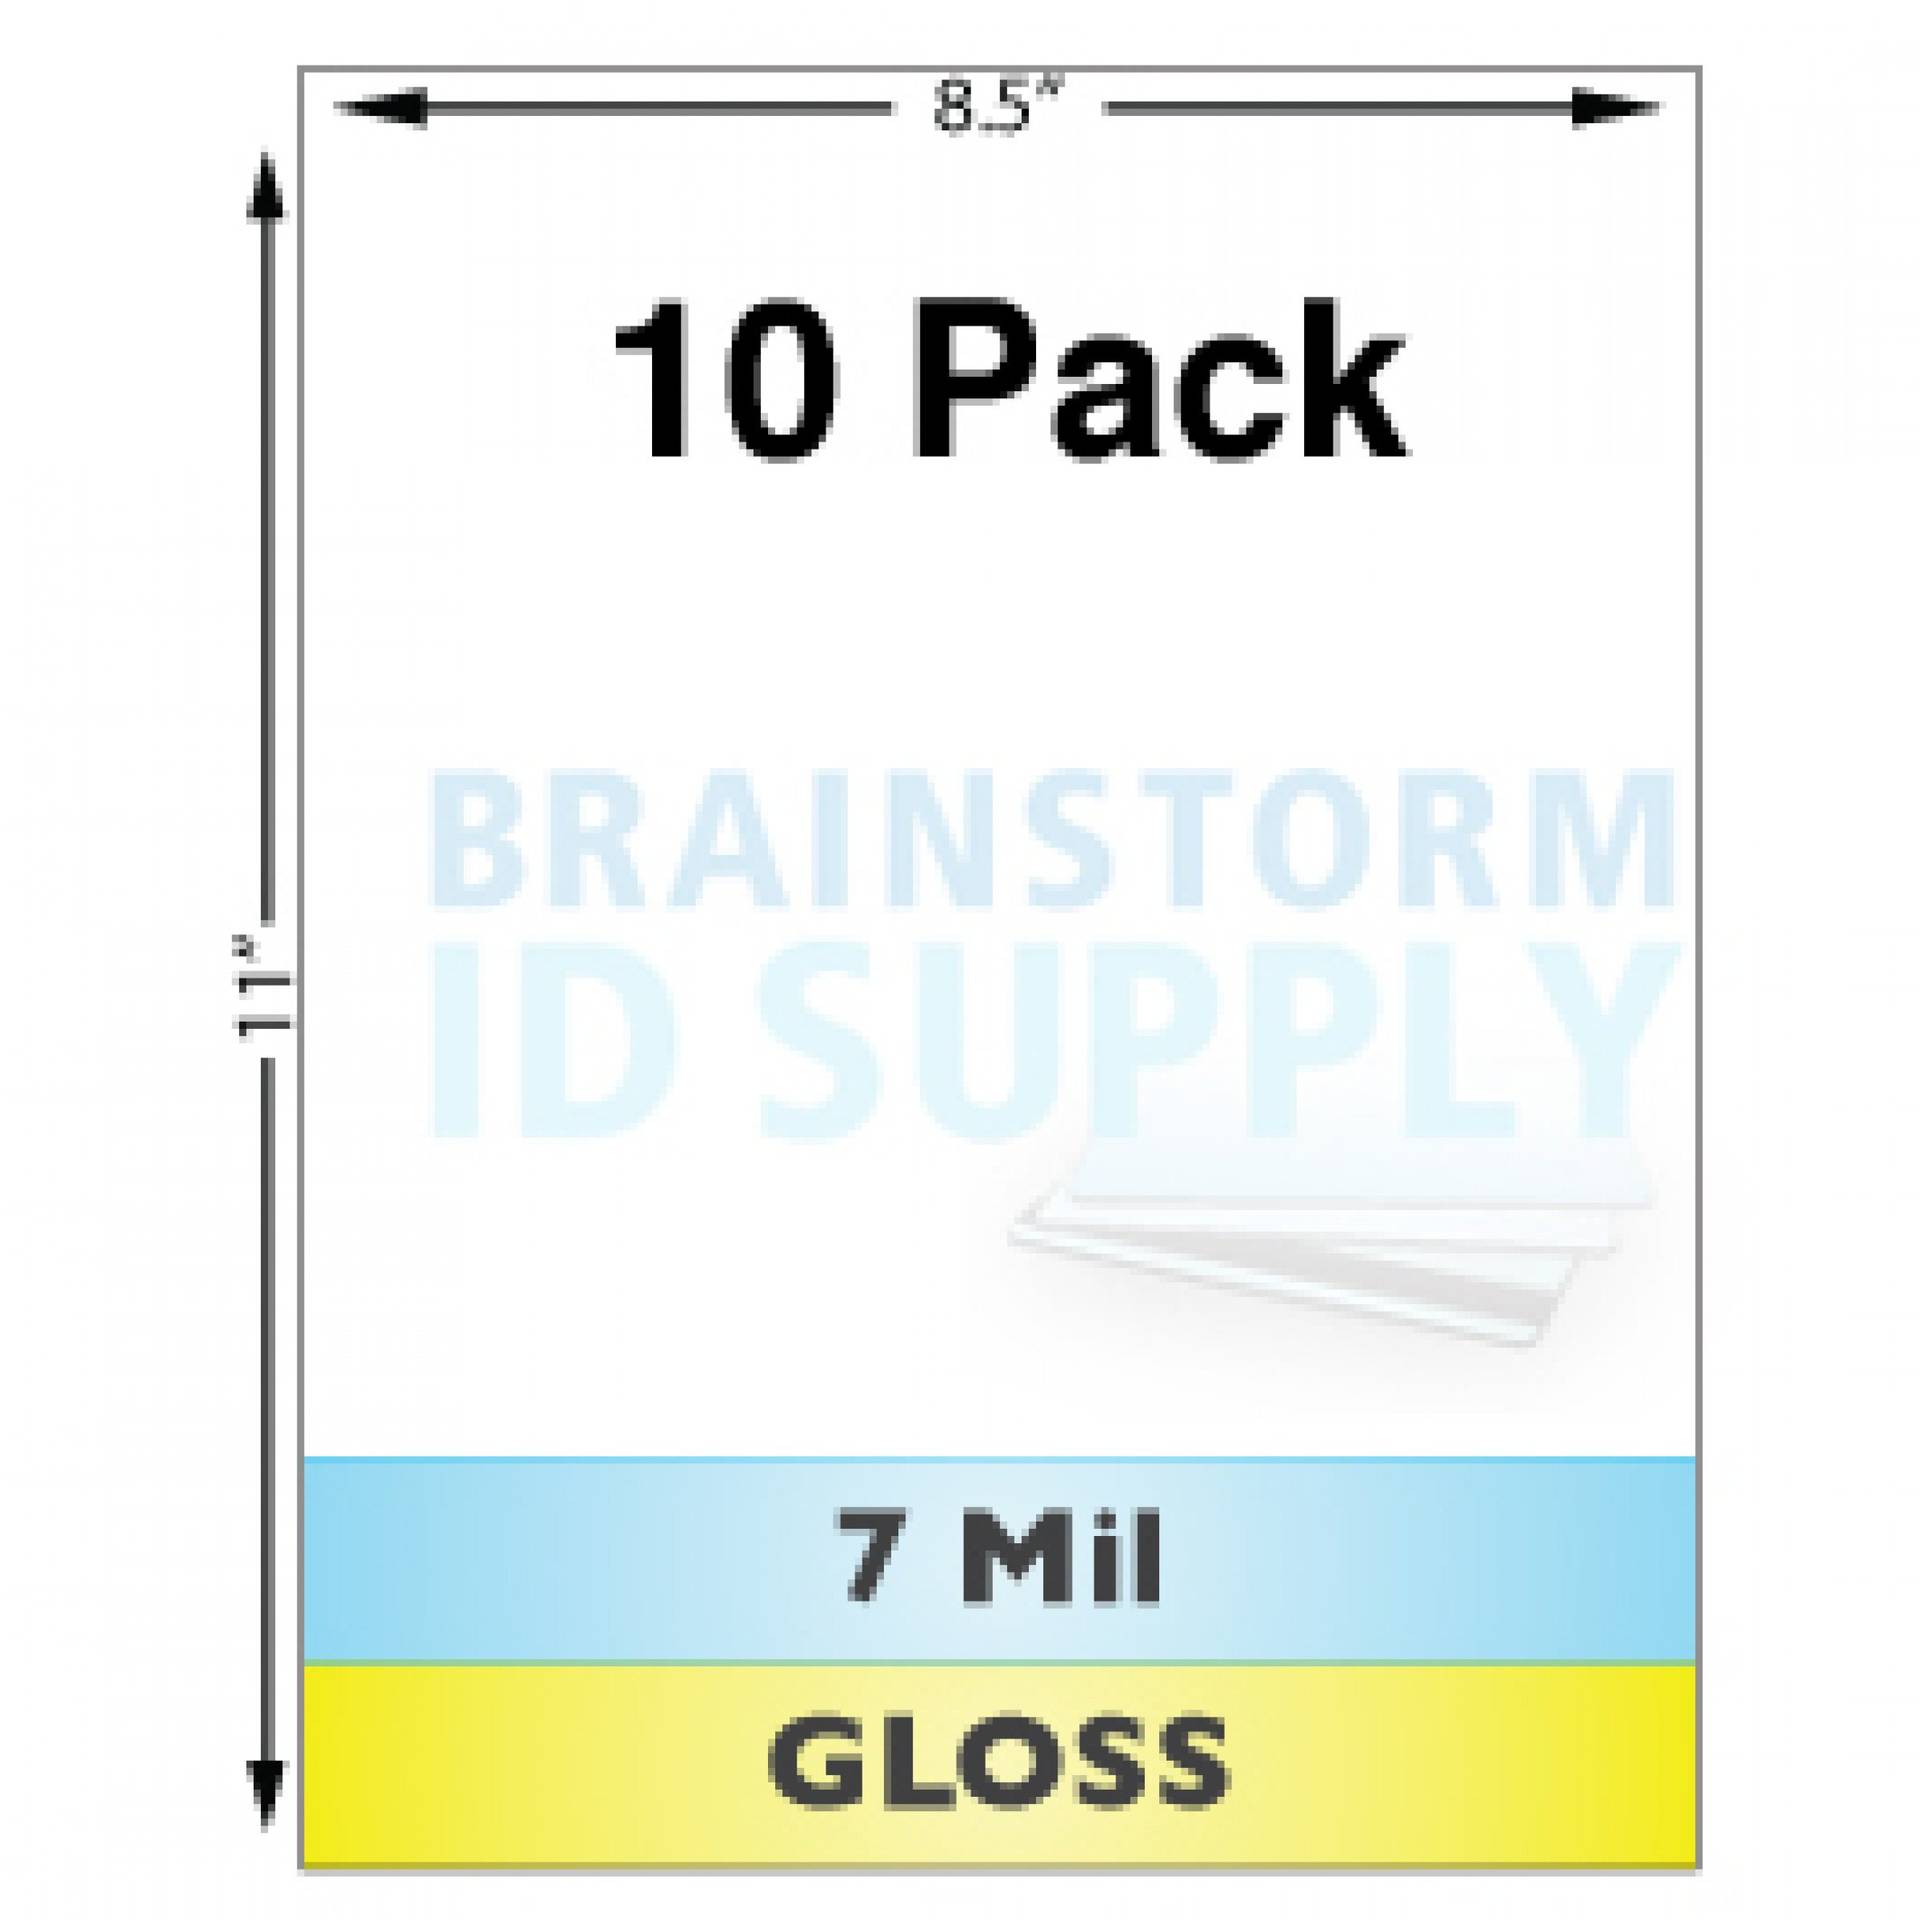 7 Mil Gloss Full Sheet Laminates - 10 Pack